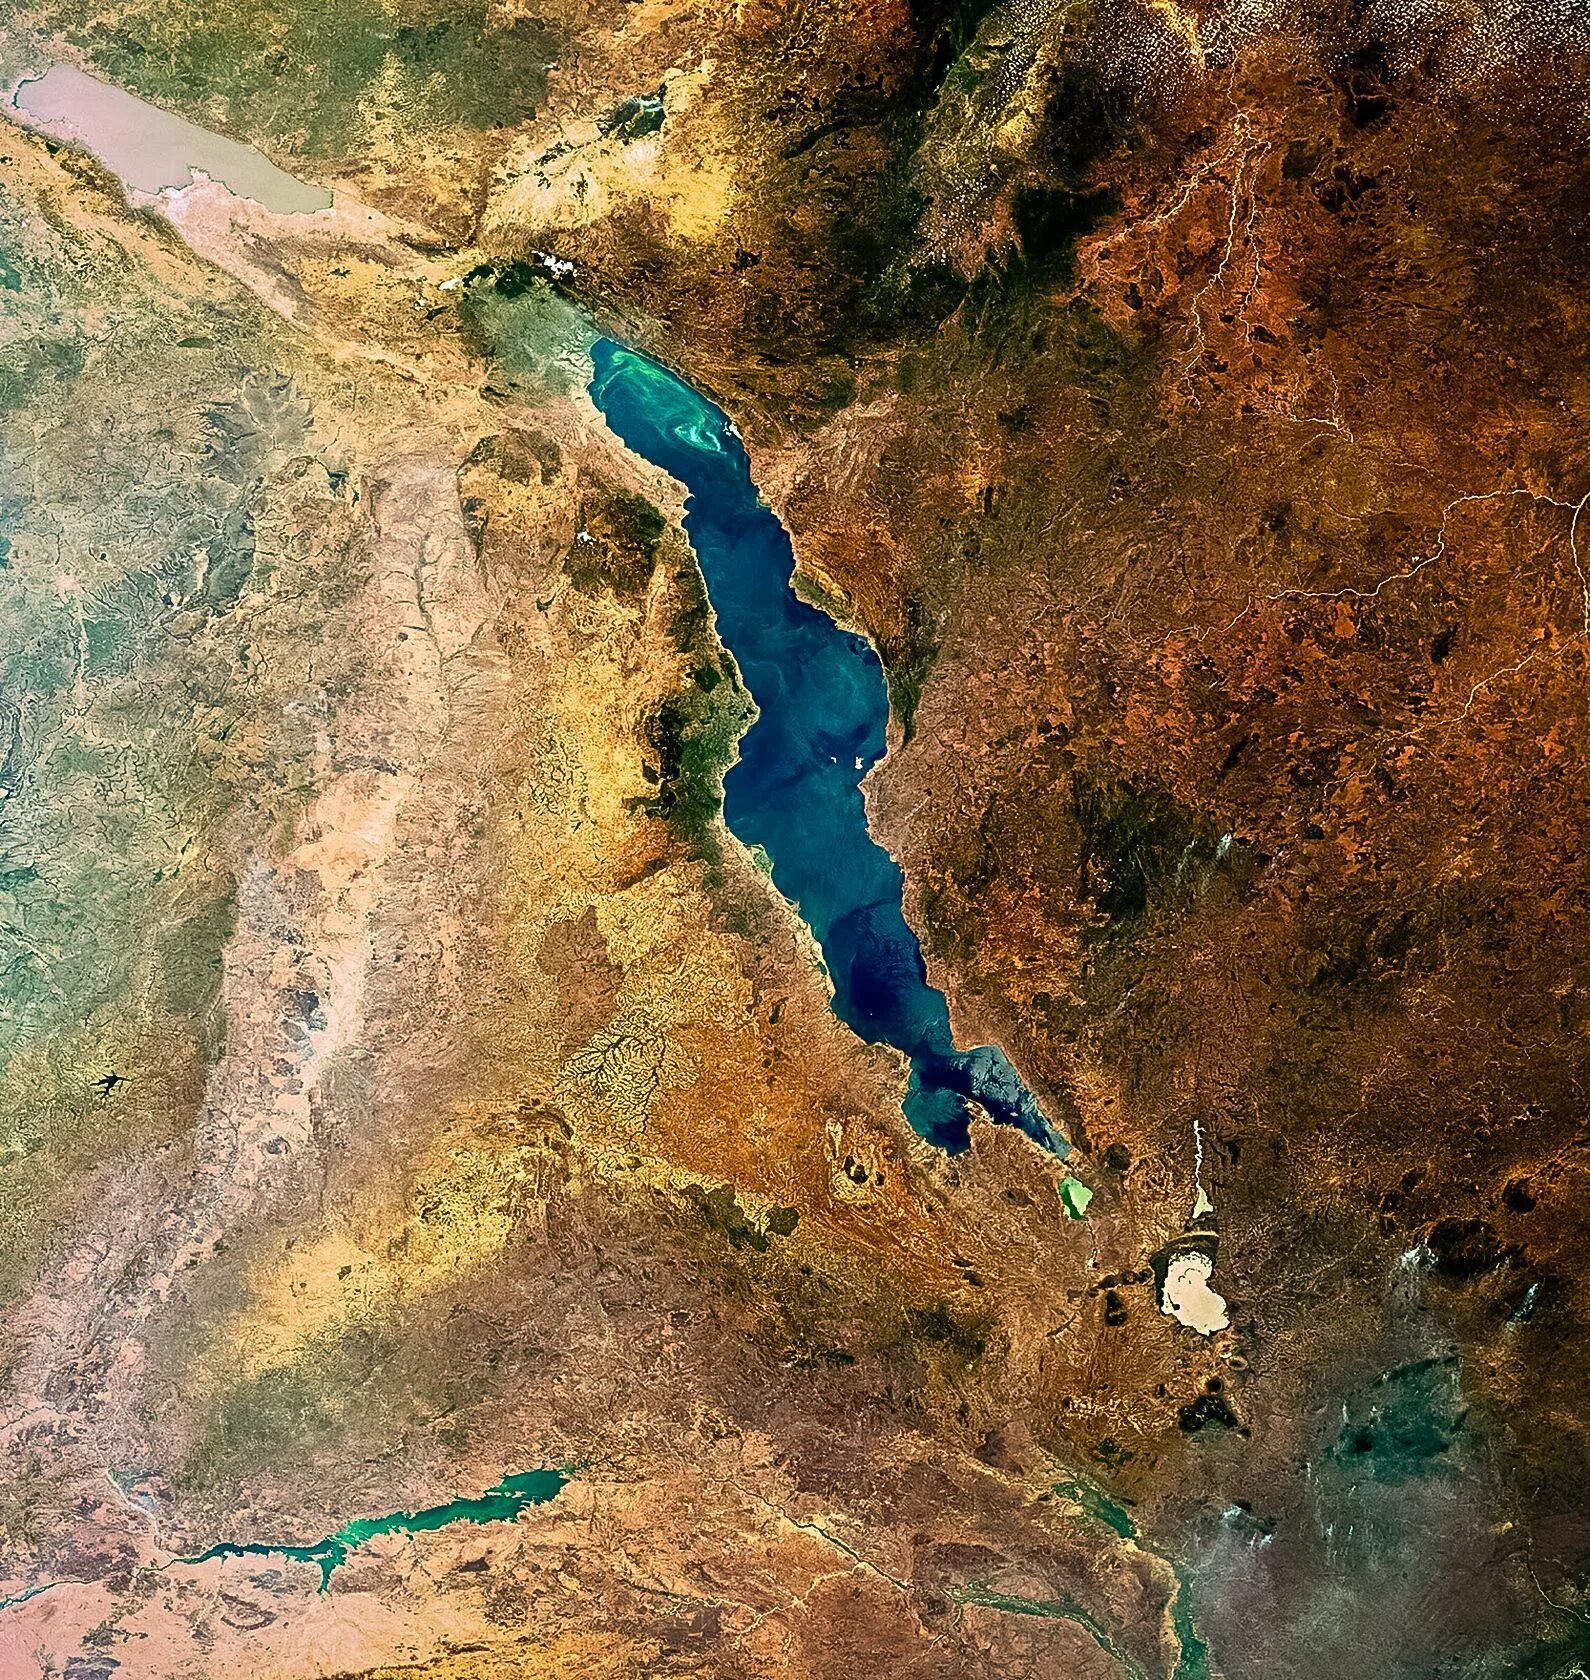 Длинное озеро африки. Озеро Ньяса Малави. Озеро Танганьика. Нуаза Малави озеро. Танганьика и Ньяса.